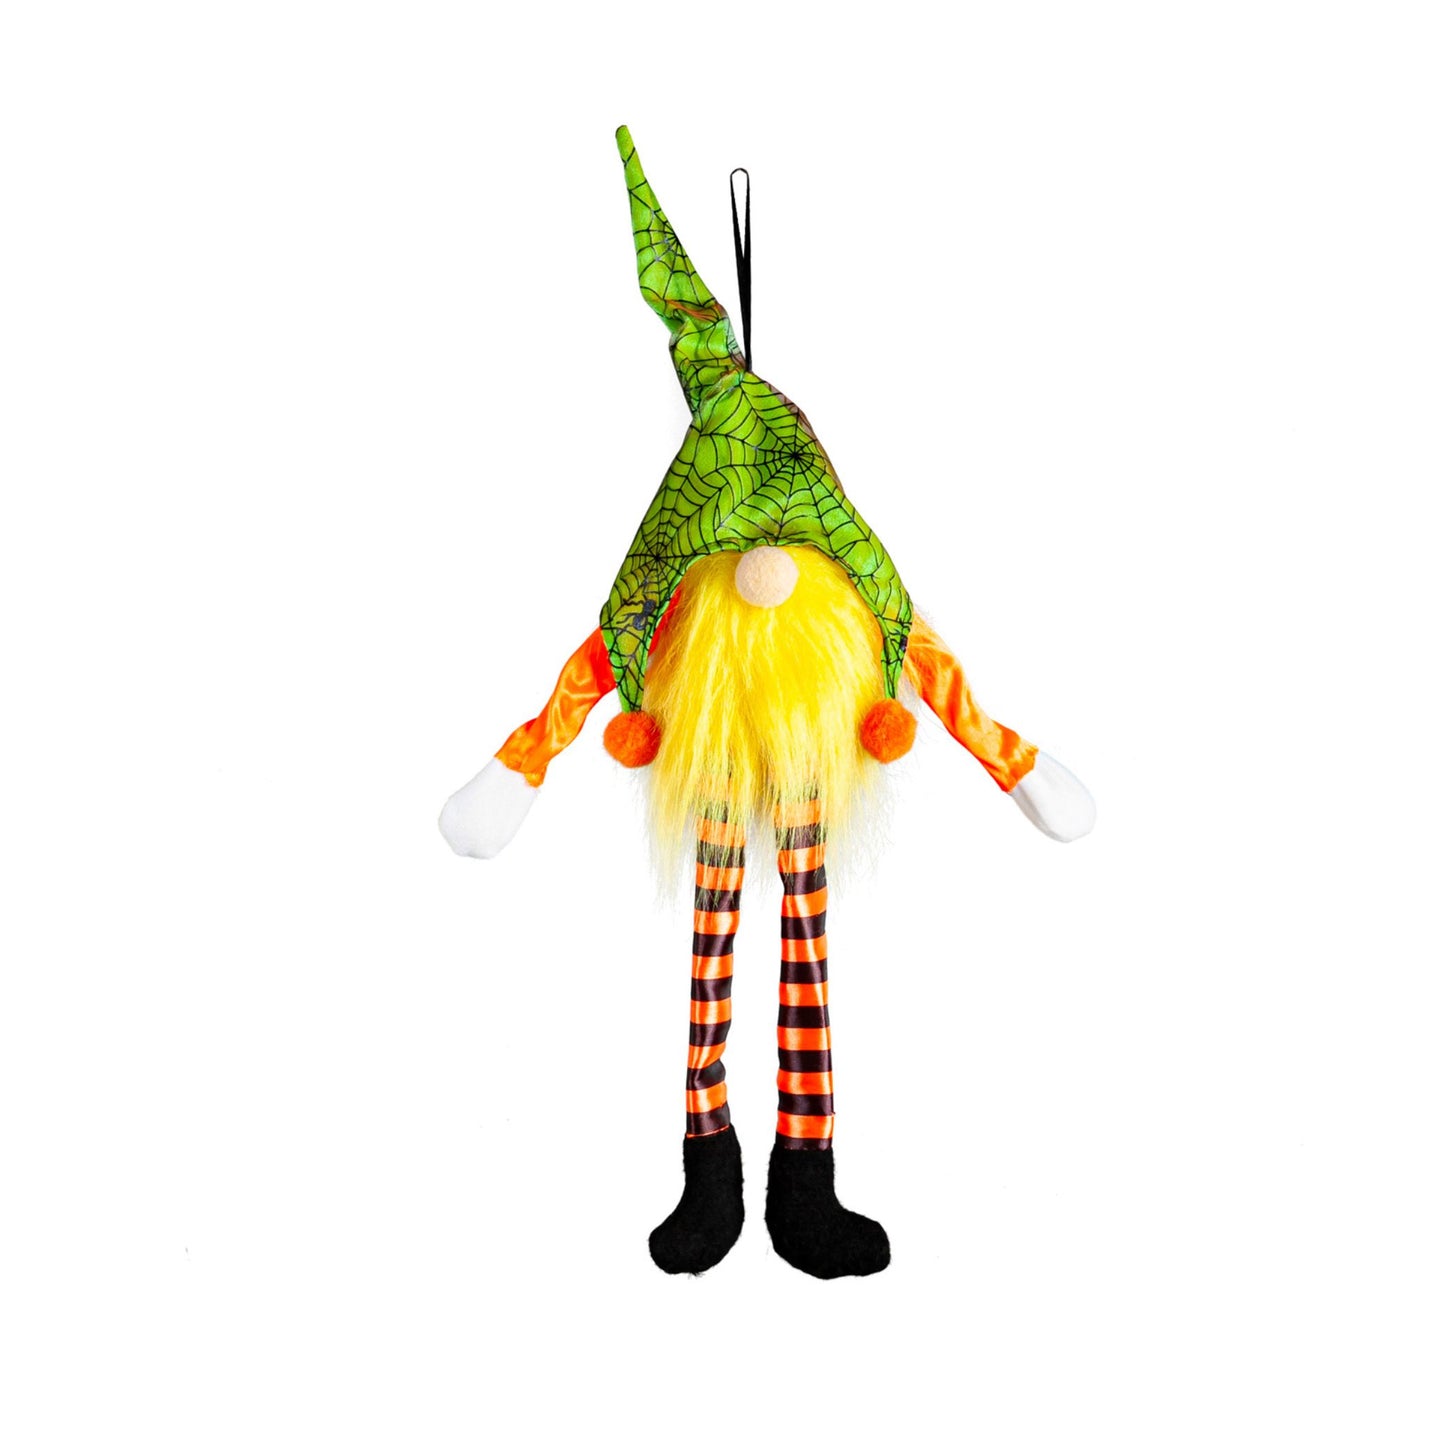 Decor Light-Up Halloween Gnome, 3 Assorted